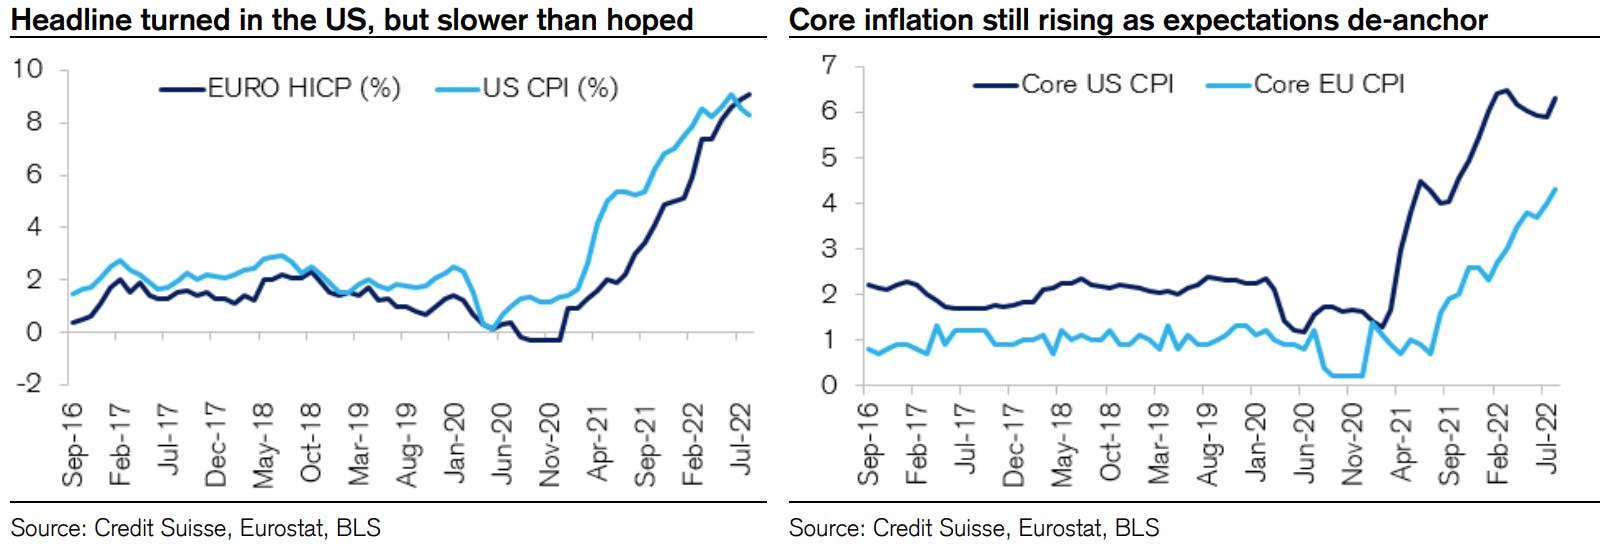 Core US CPI | Source: Credit Suisse